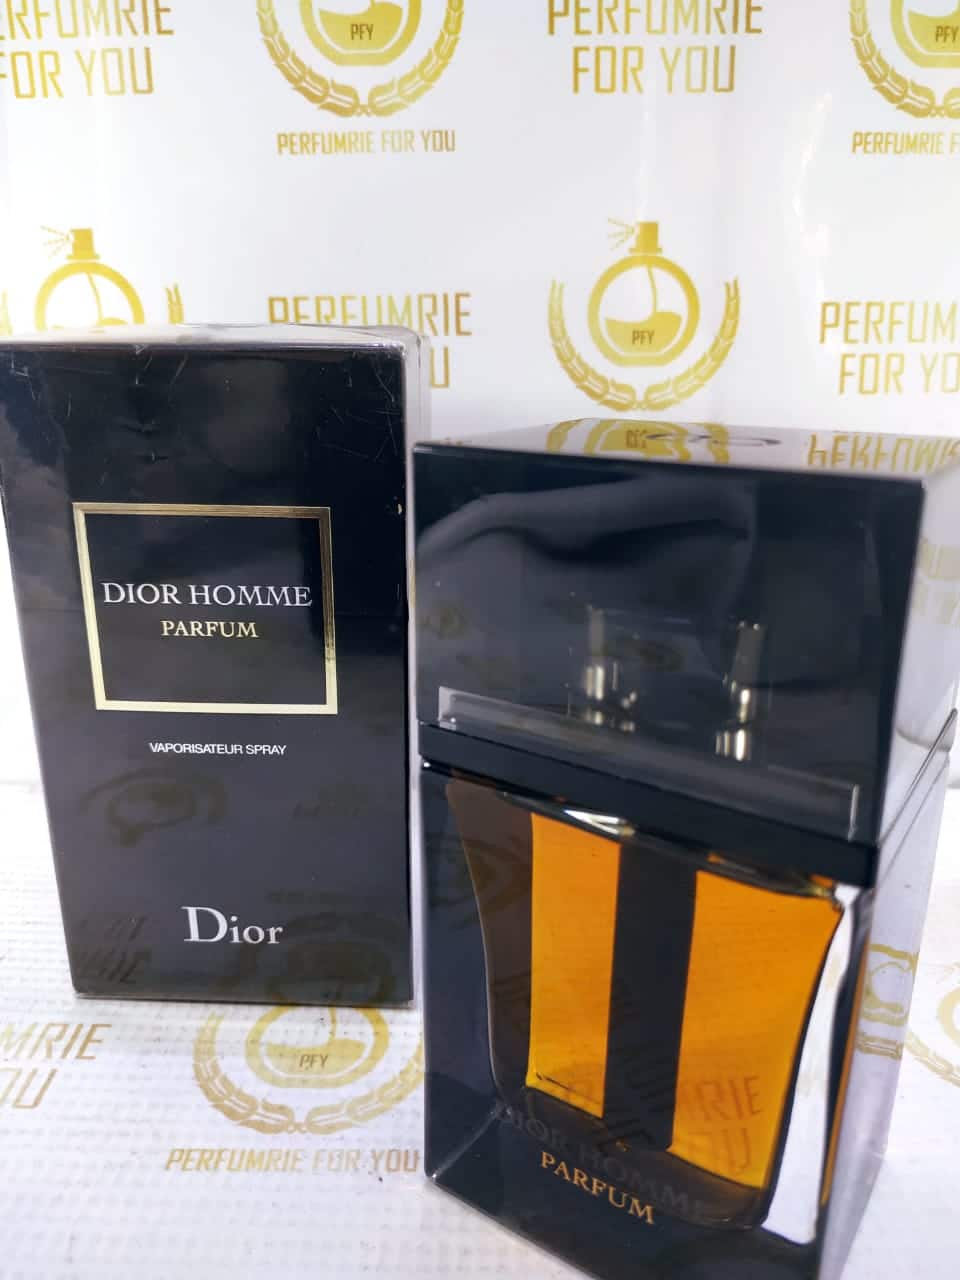 DIOR HOMME PARFUM - CHRISTIAN DIOR - vente de parfum original Maroc meilleur prix maroc